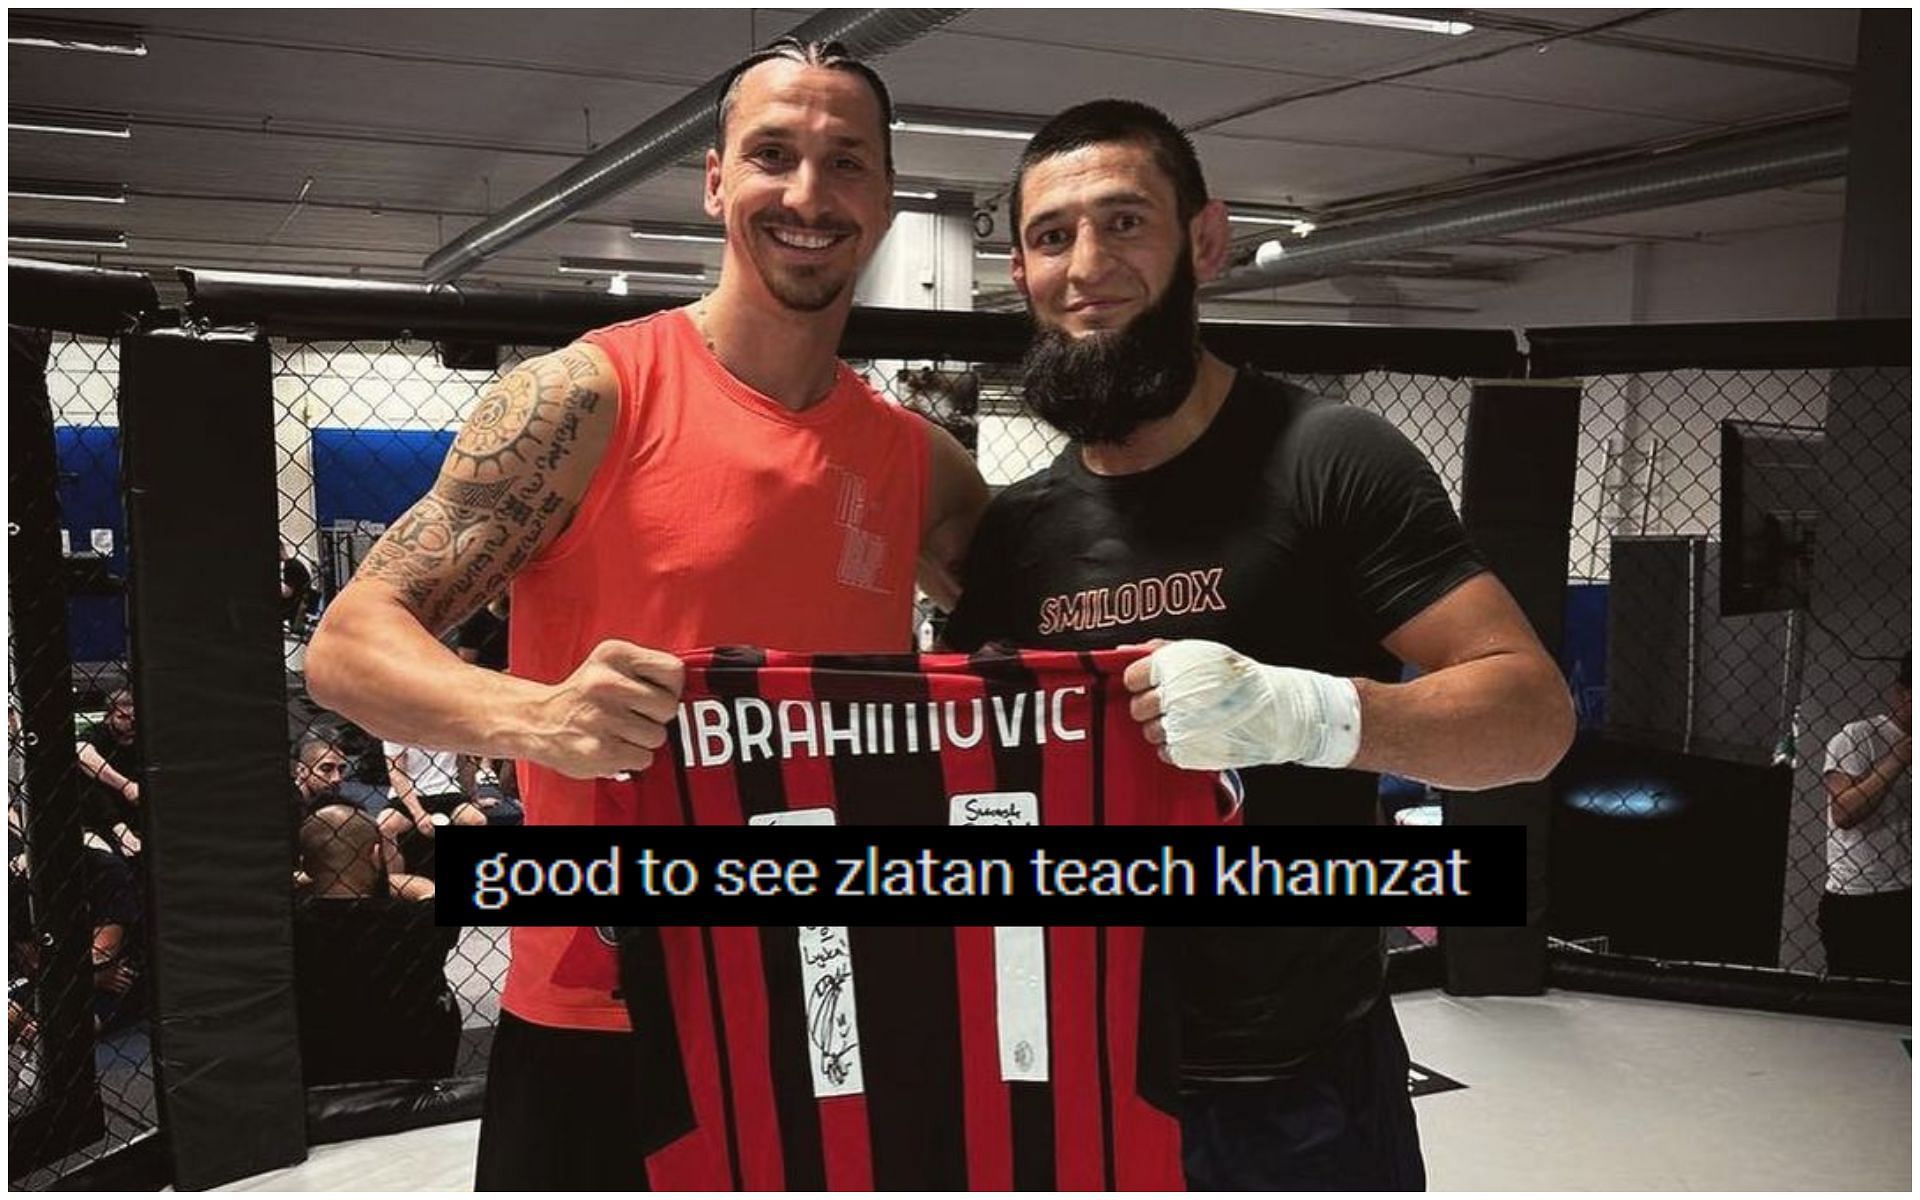 Khamzat Chimaev meets Zlatan Ibrahimovic